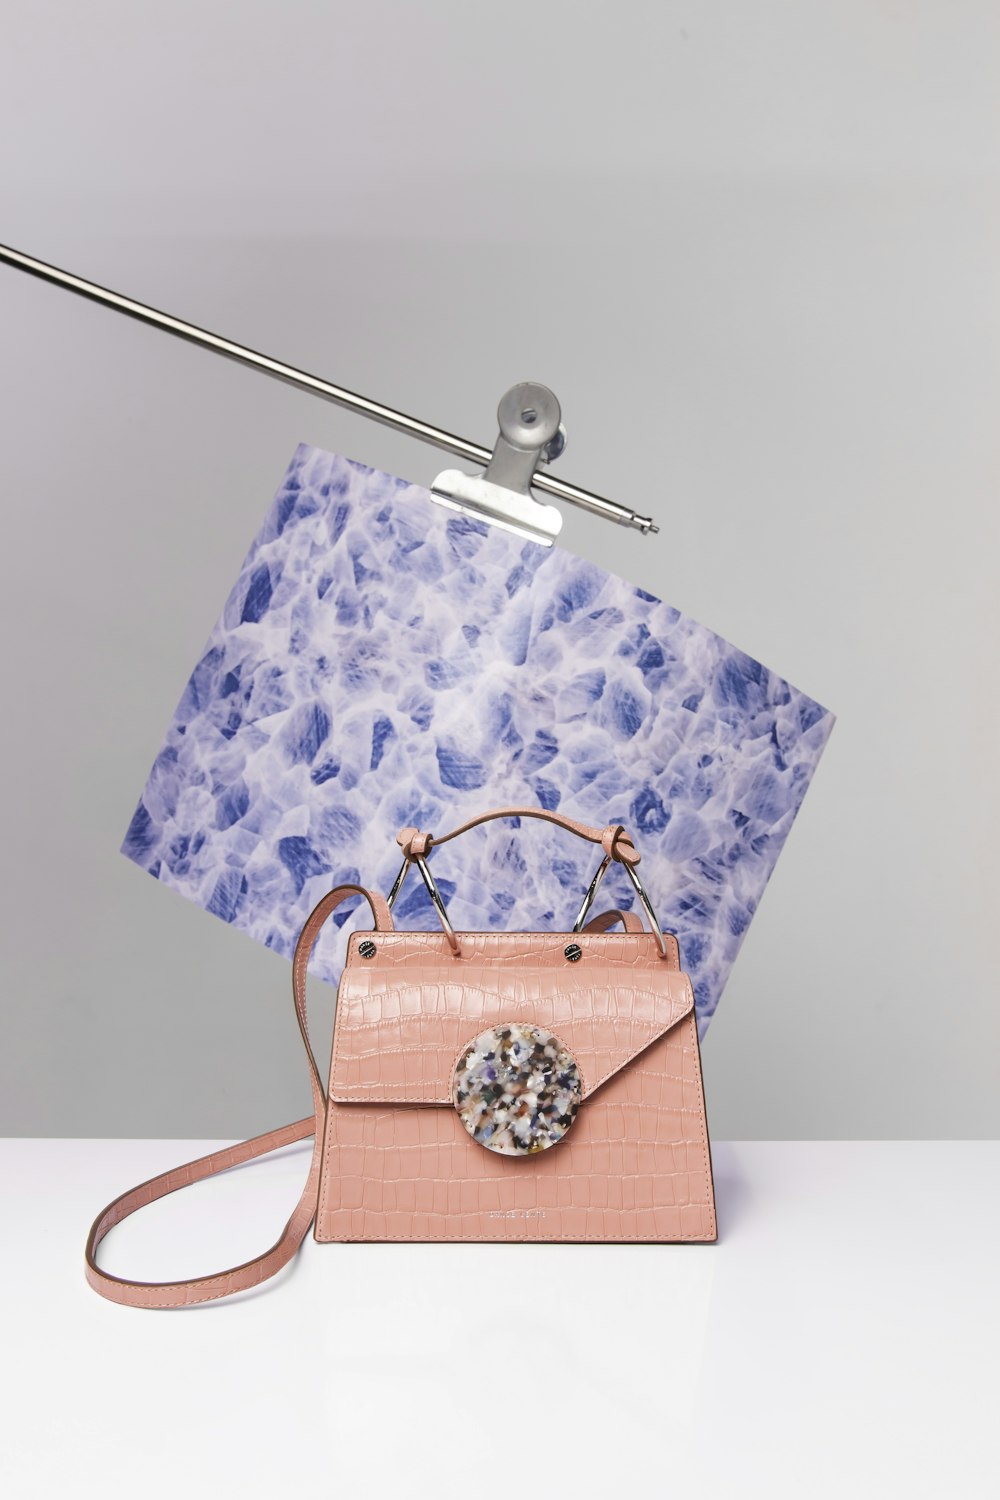 blue and white floral handbag